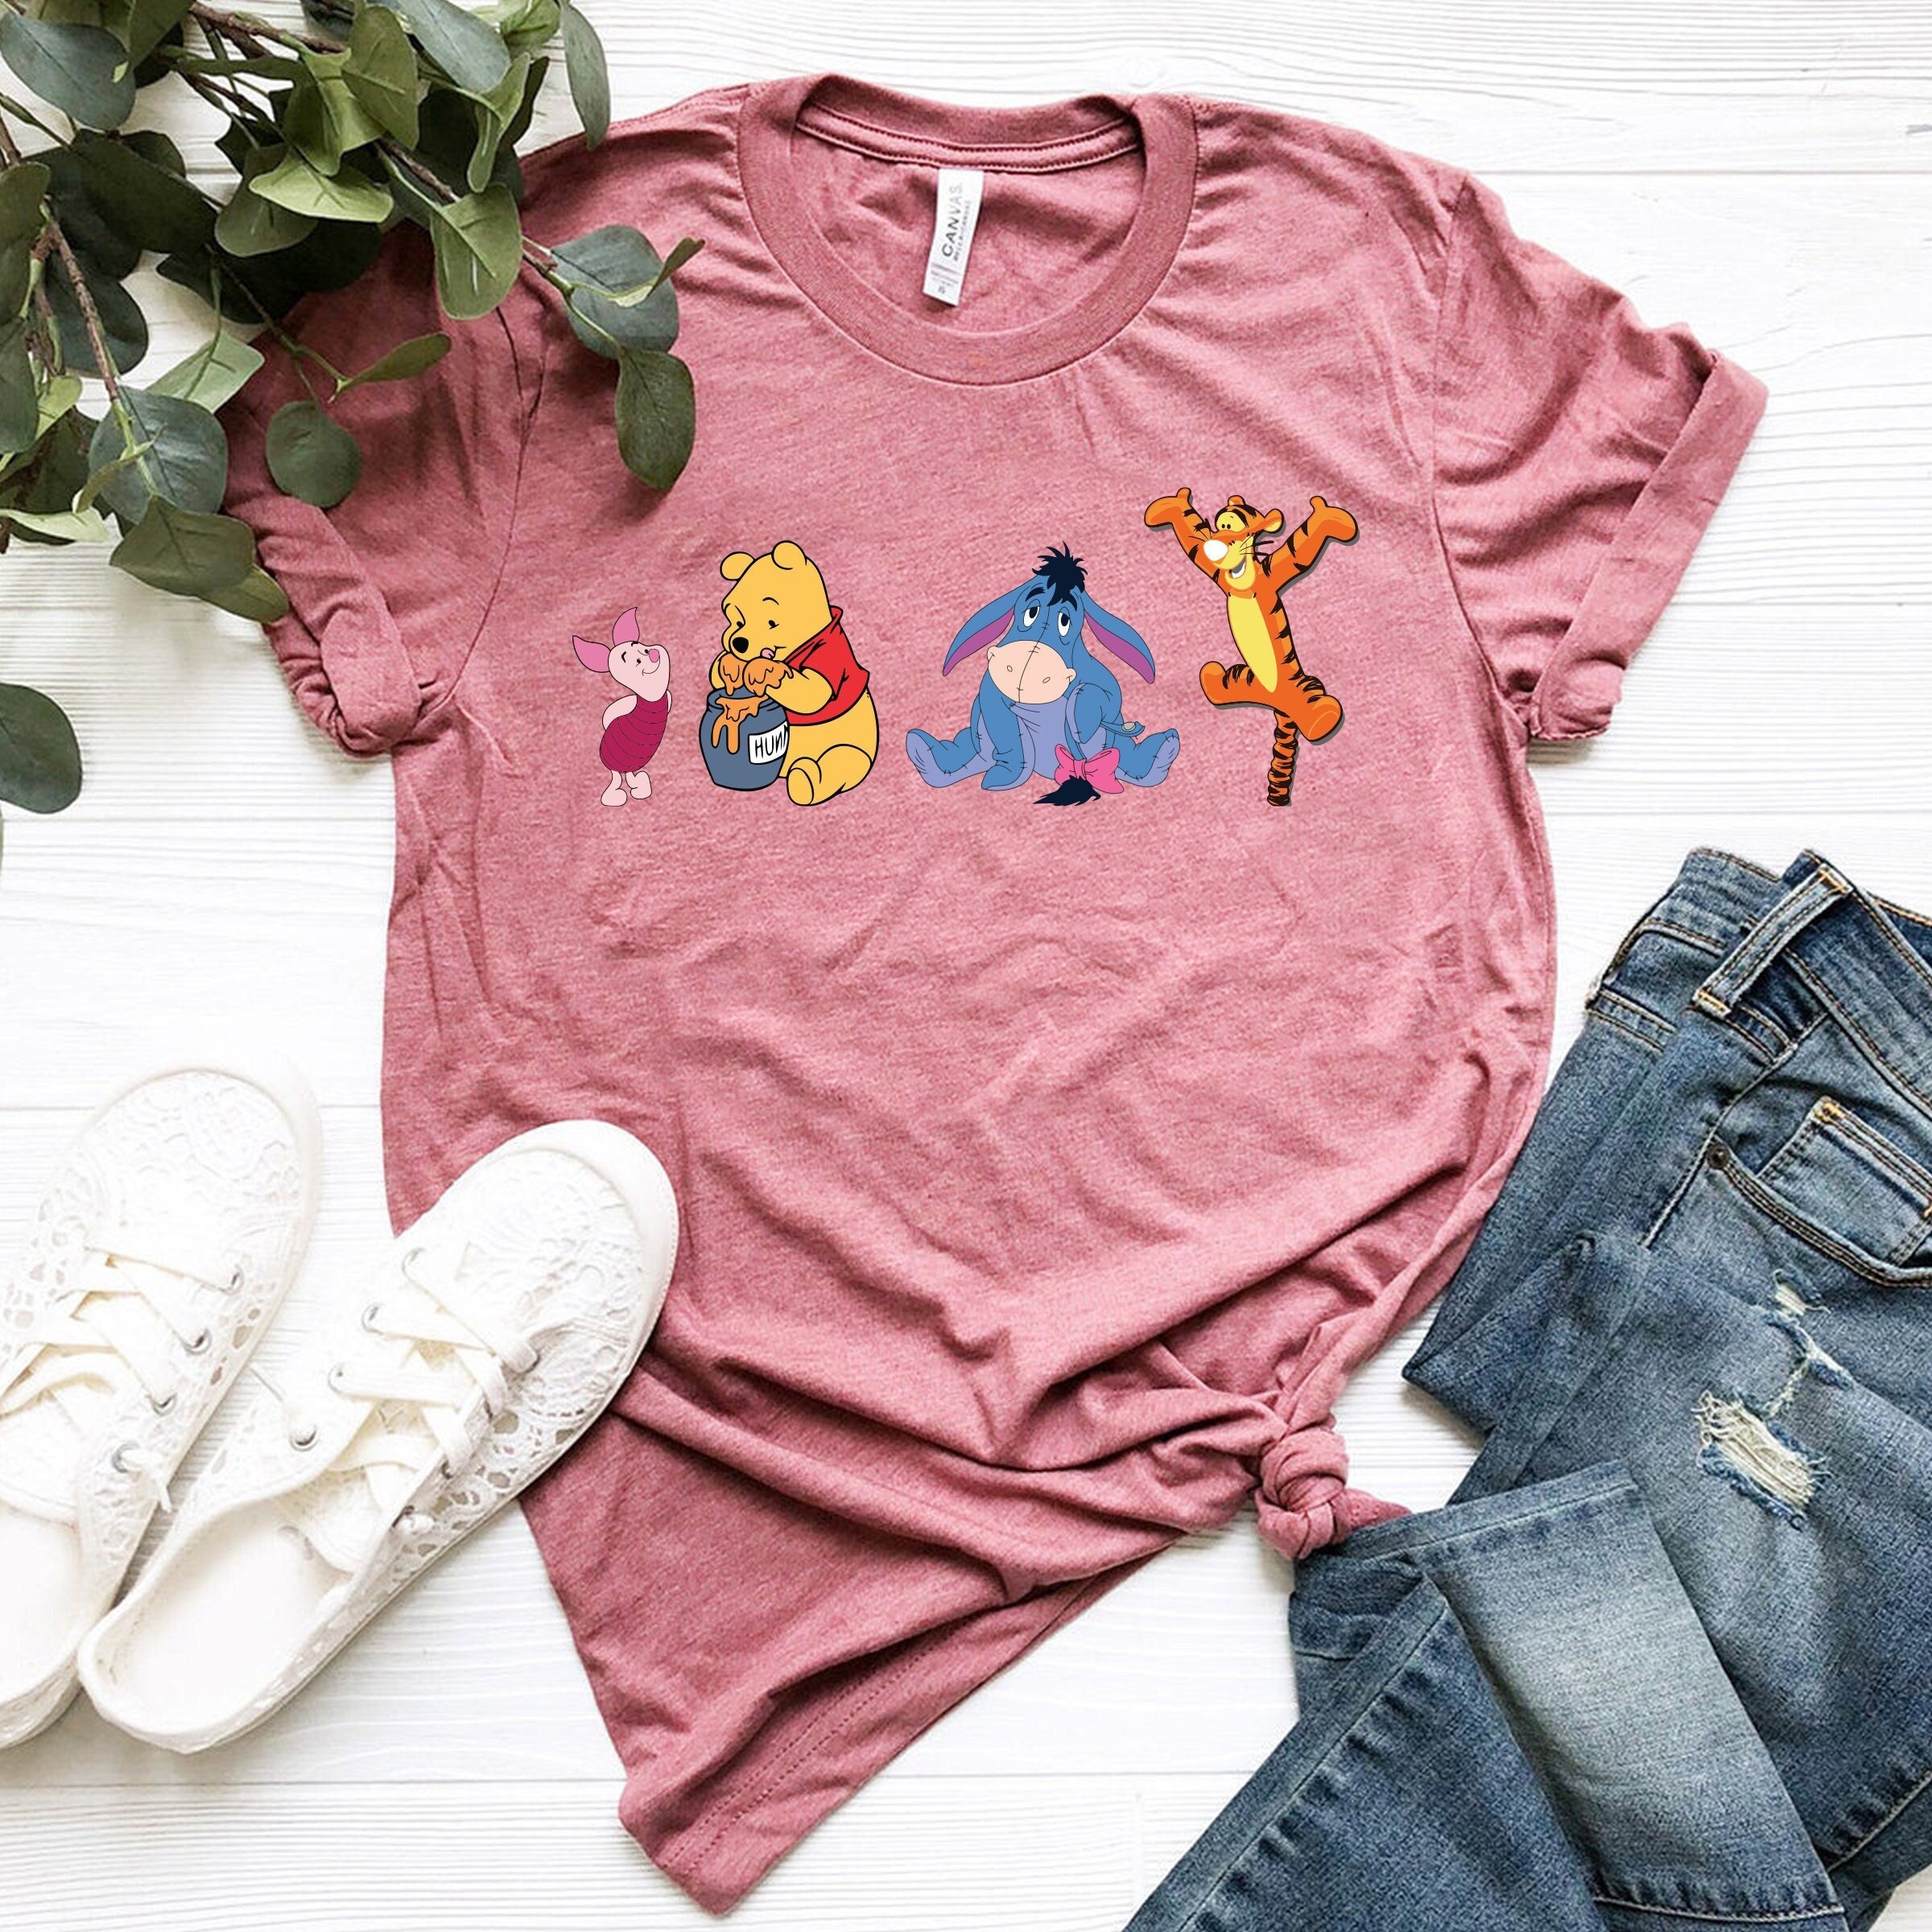 Disney Shirt, Winnie The Pooh Shirt, Disney Friends T-shirt, Pooh Tshirt, Tigger Shirt, Pooh Friends Shirts